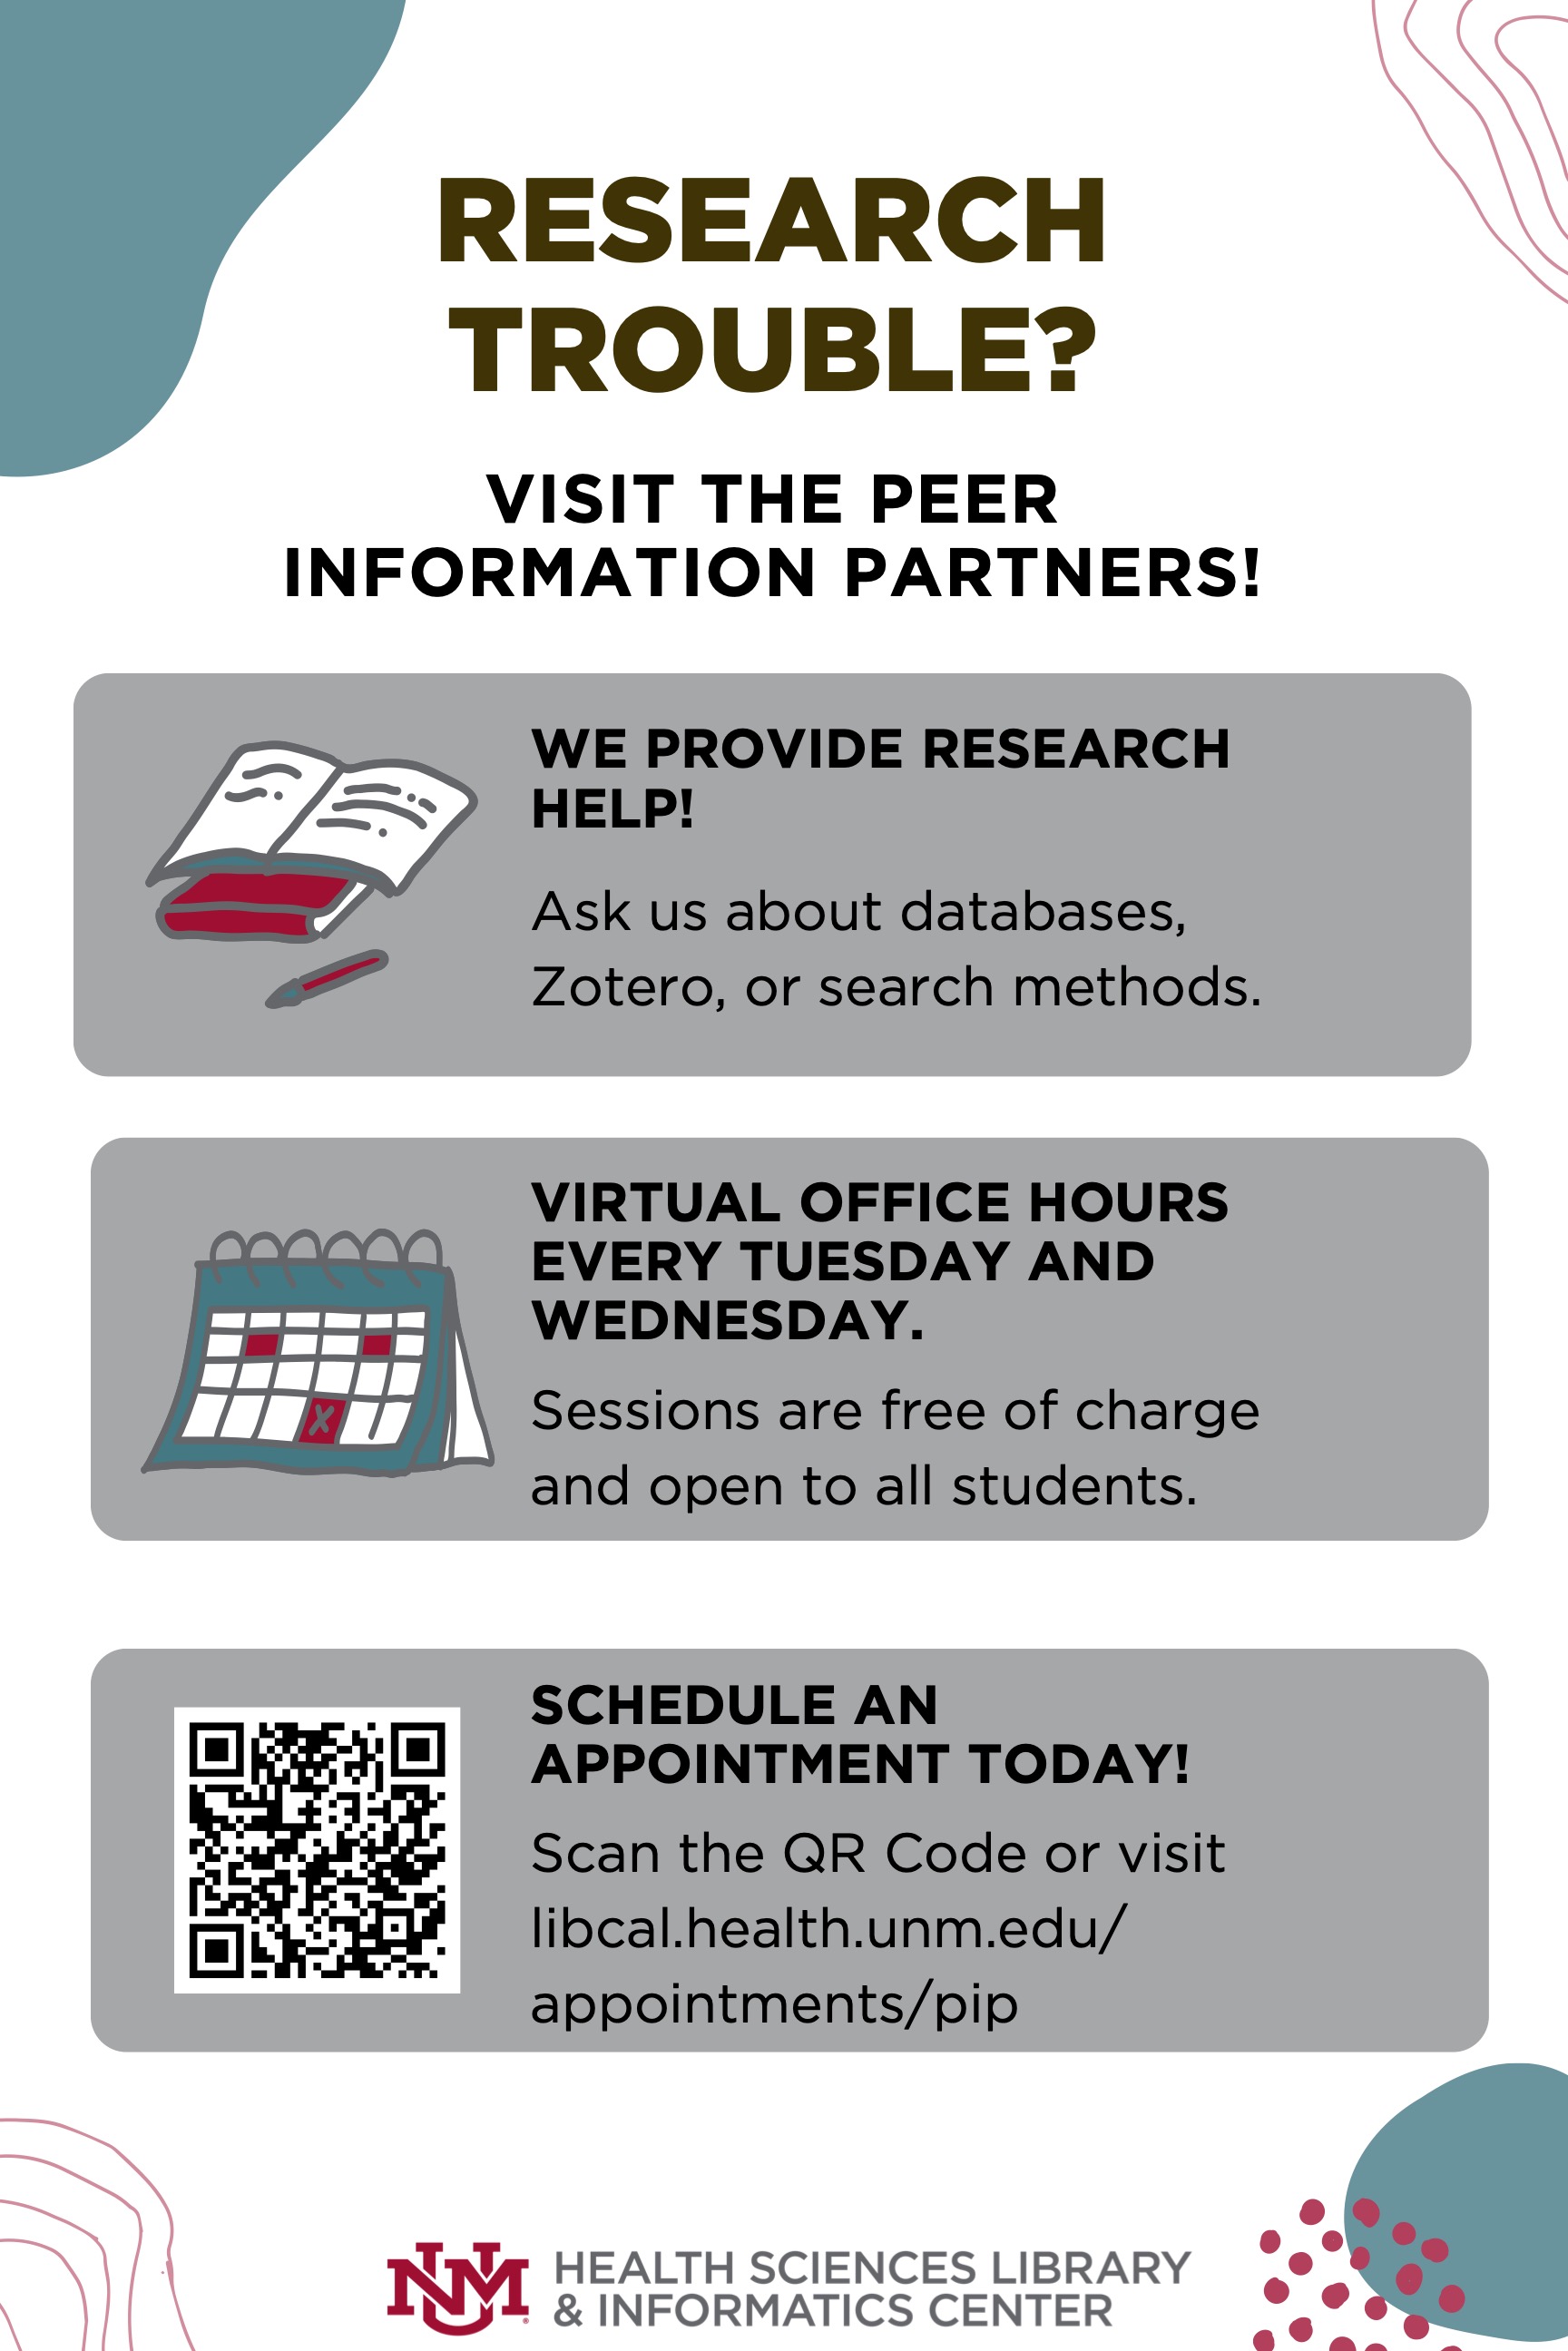 Peer Information Partners 的研究援助传单，每周二和周三免费提供会议和虚拟办公时间。 访问 libcal.health.unm.edu/appointments/pip 了解更多信息